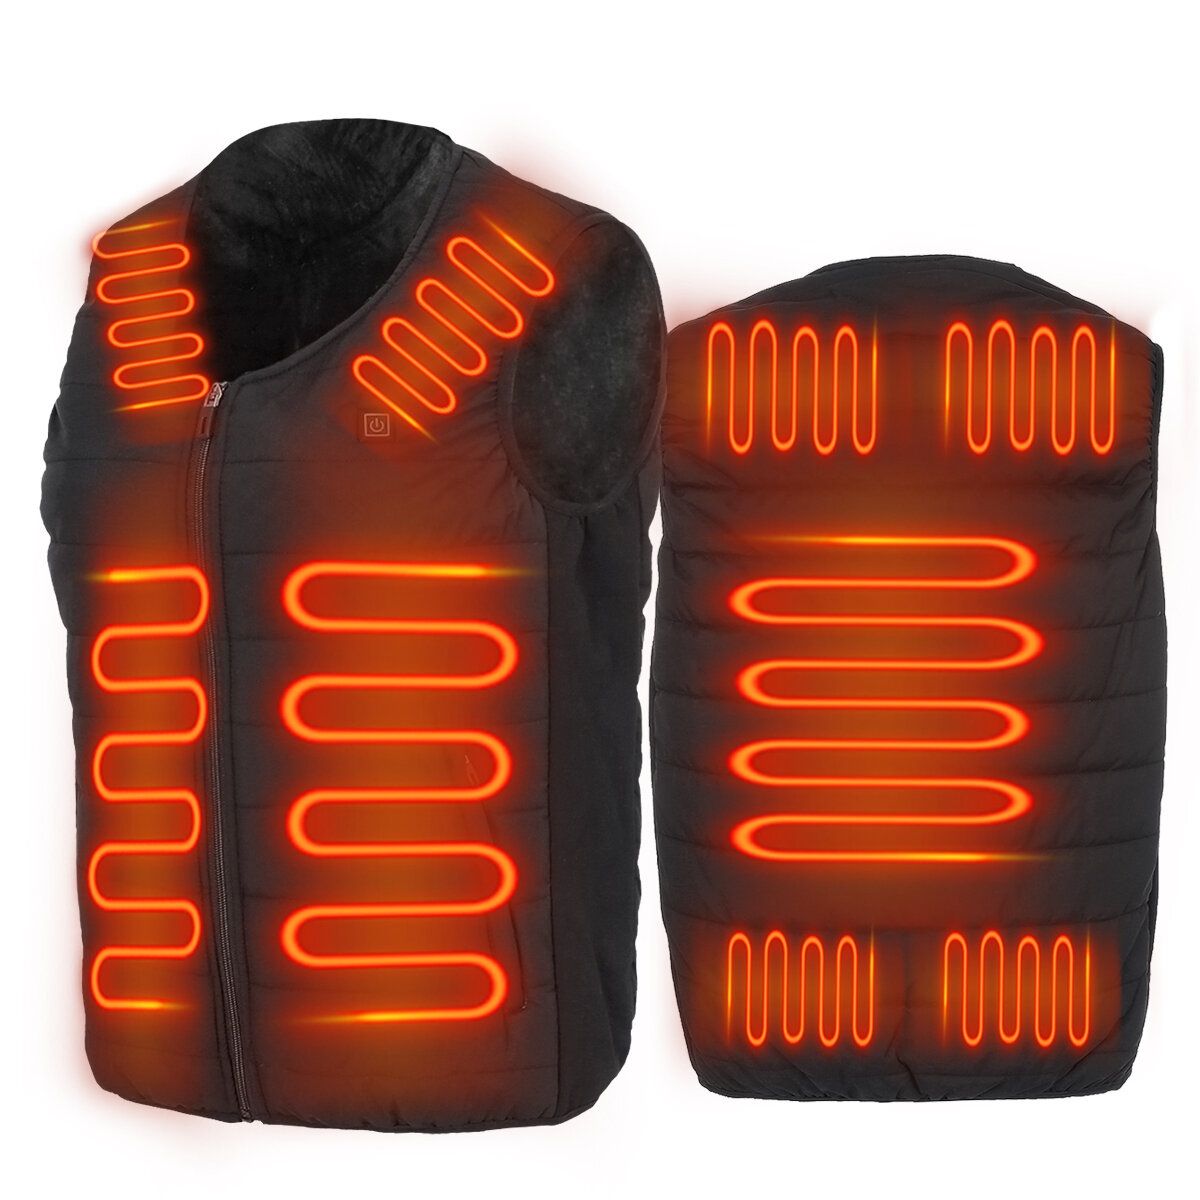 Image of Unisex 9-Heating Zones Electric Vest Heated Jacket USB Warm Up Winter Body Racing Coat Thermal